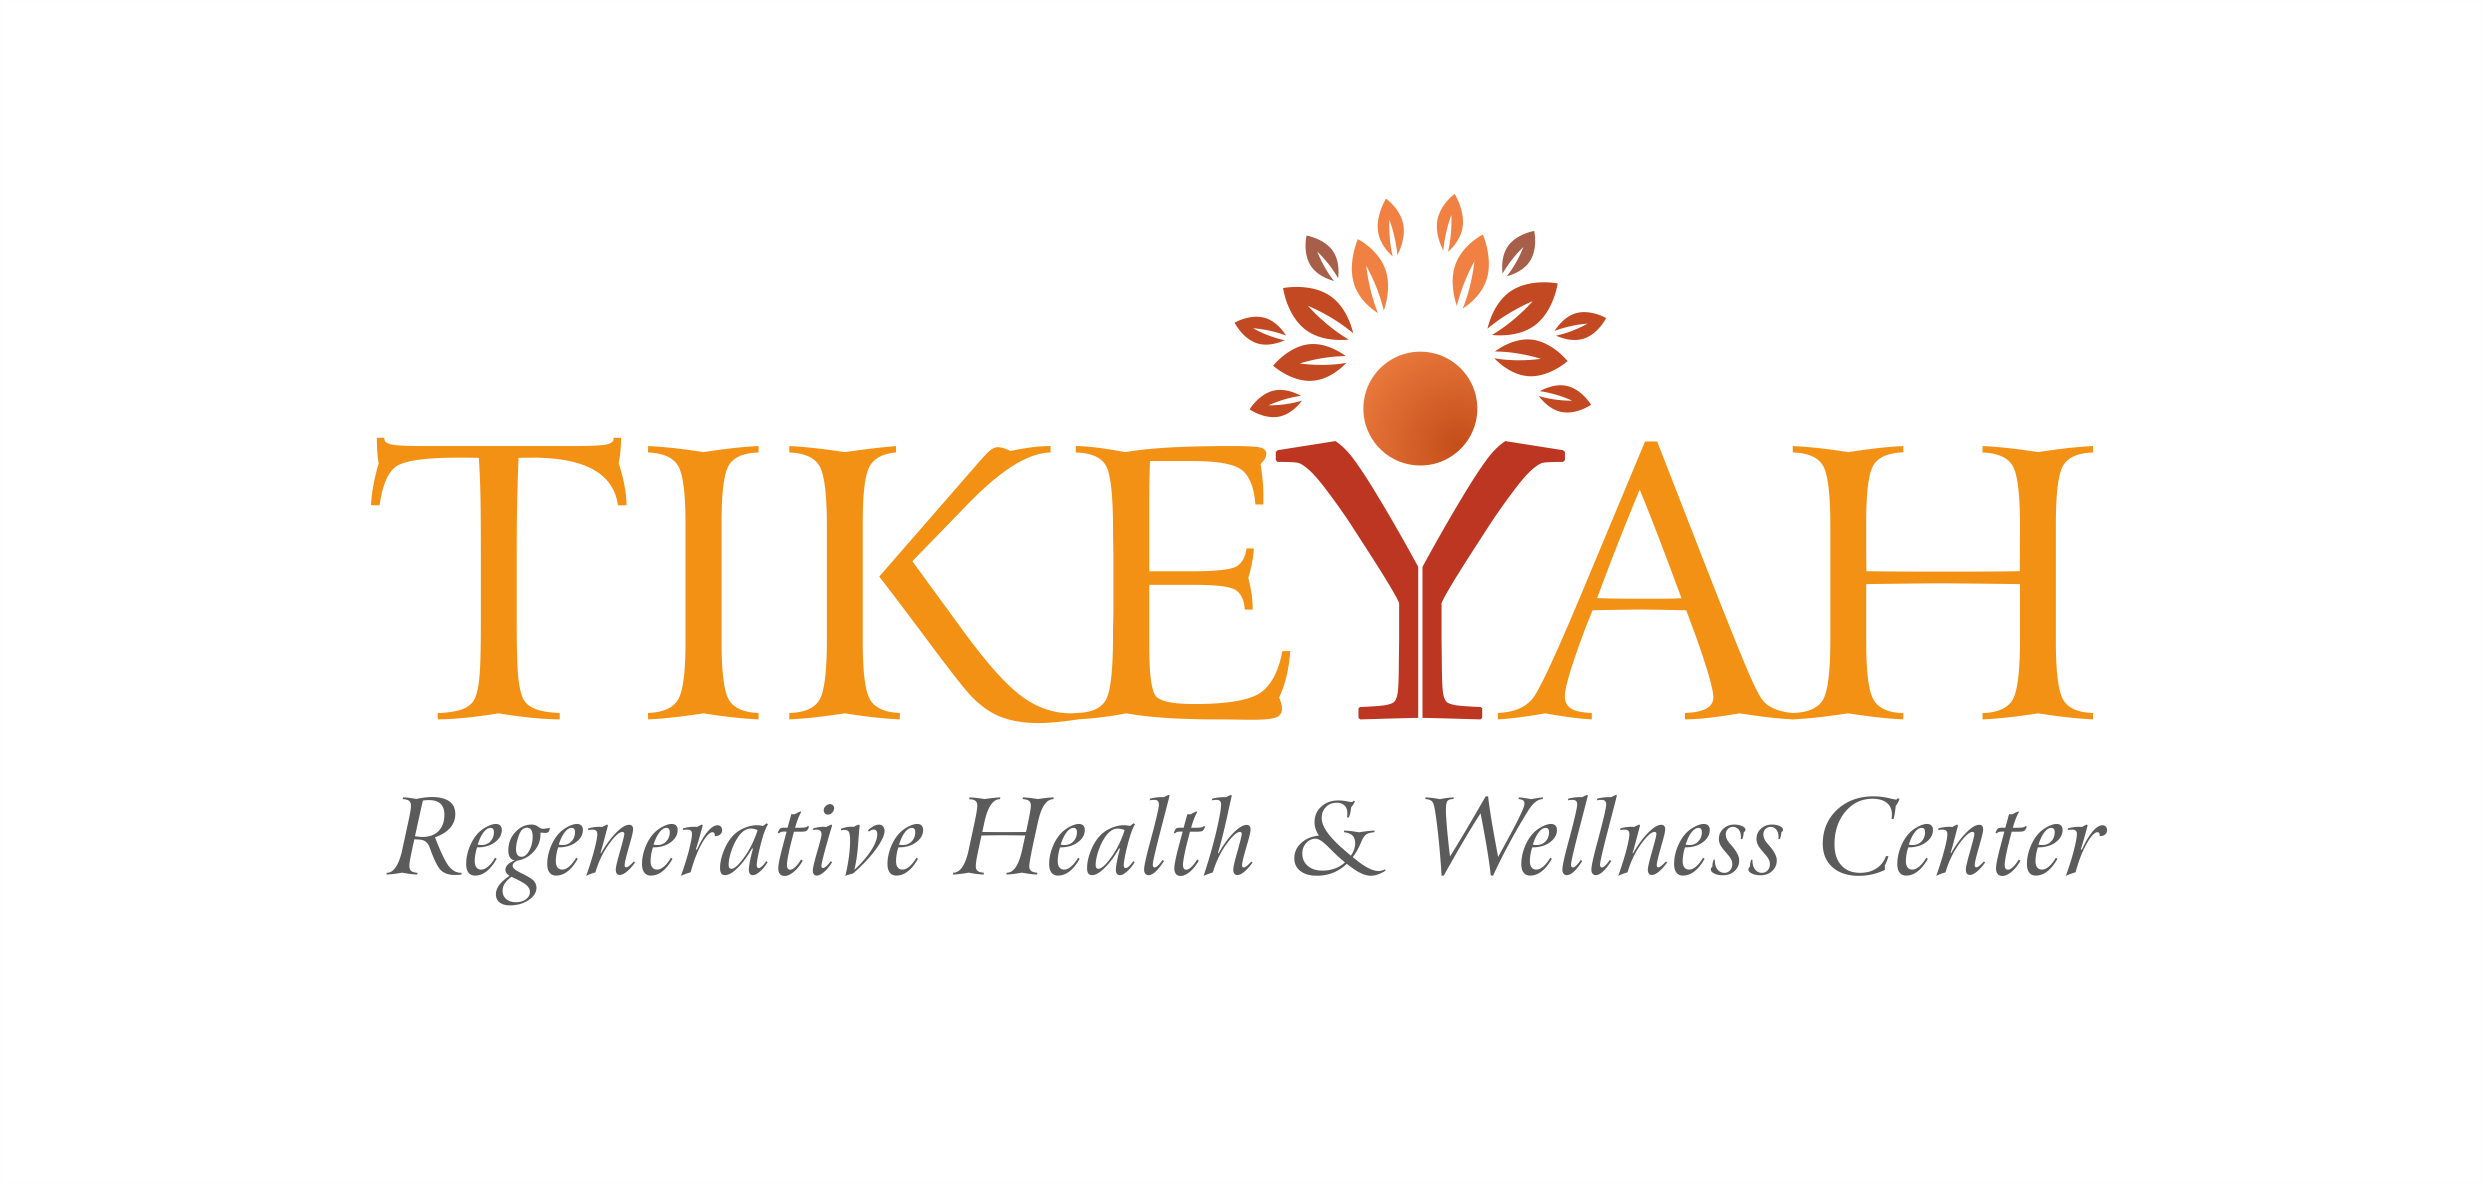 Tikeyah Regenerative Health & Wellness Center